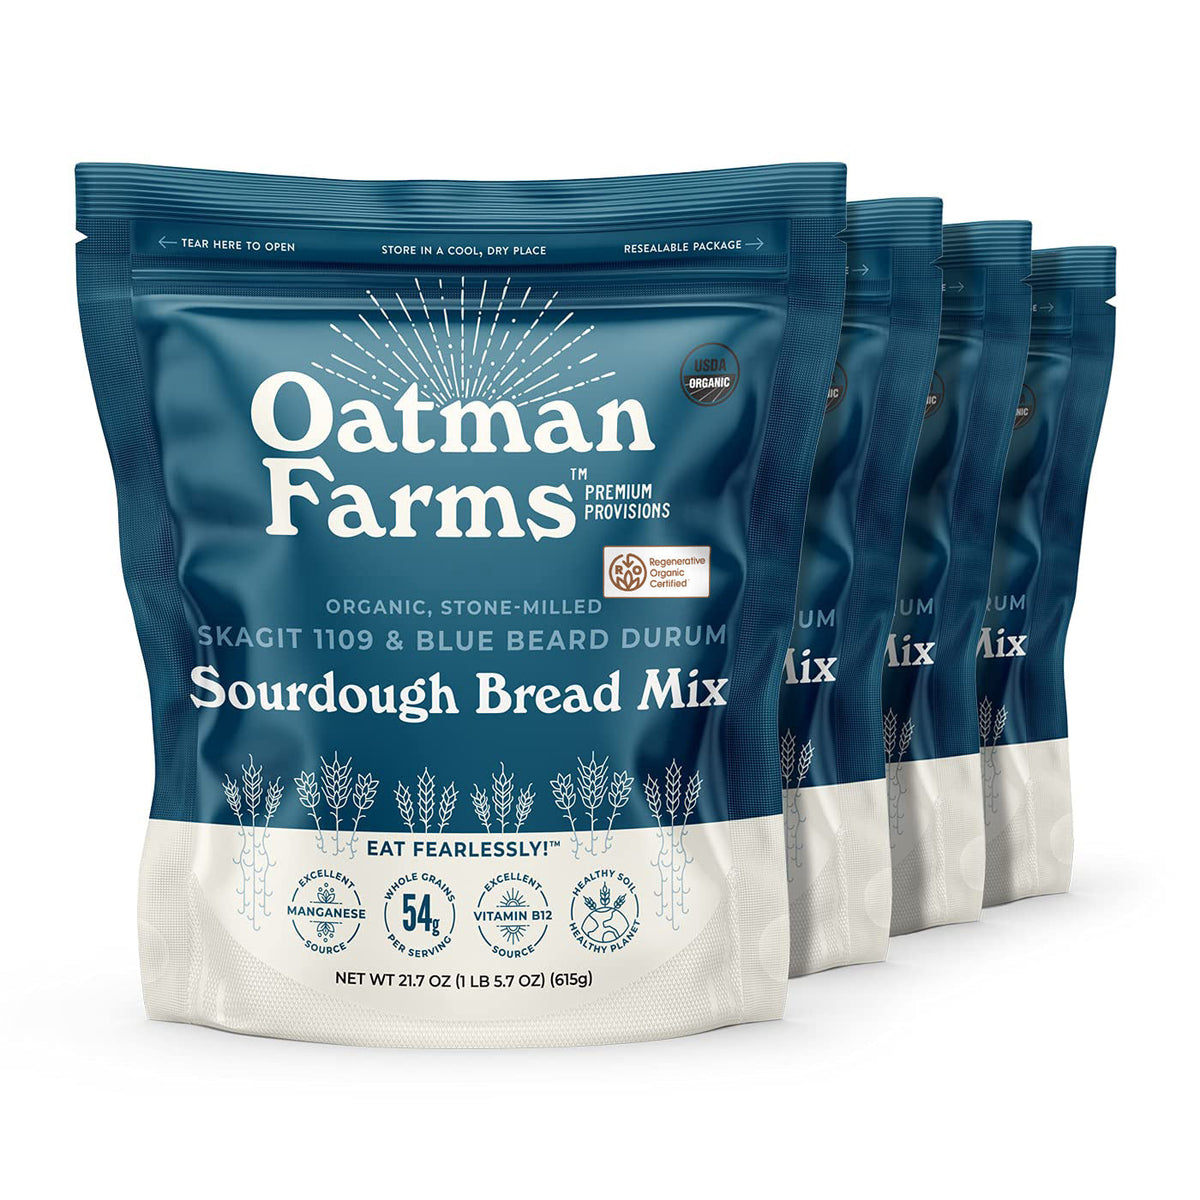 Oatman Farms Sourdough Bread Mix Blue Beard Durum &amp; Skagit 1109, 4 Pack